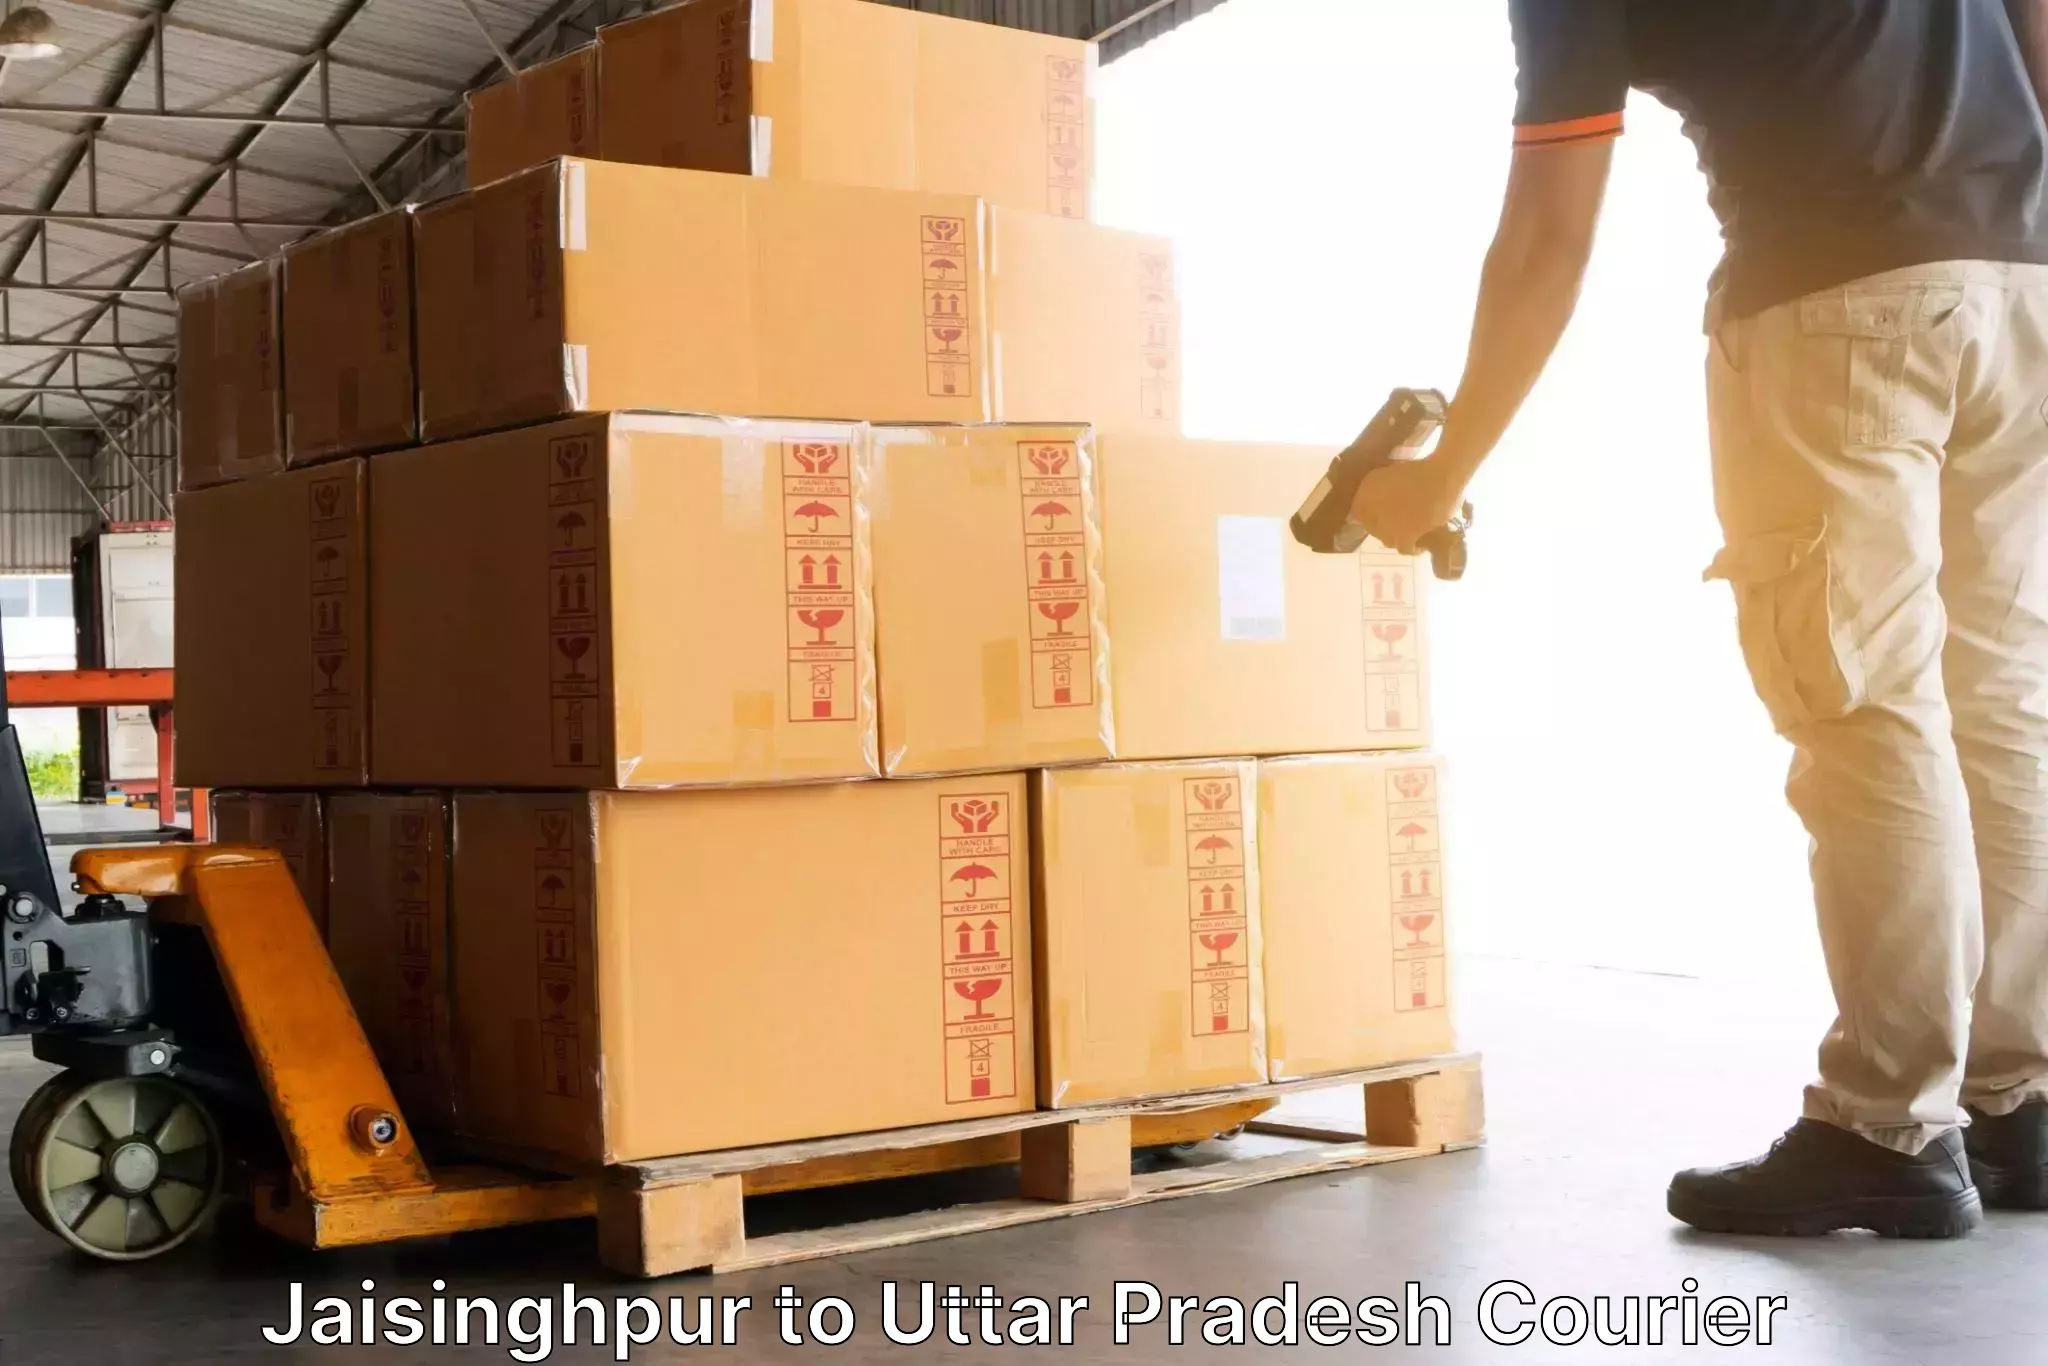 Doorstep delivery service Jaisinghpur to Lakhimpur Kheri